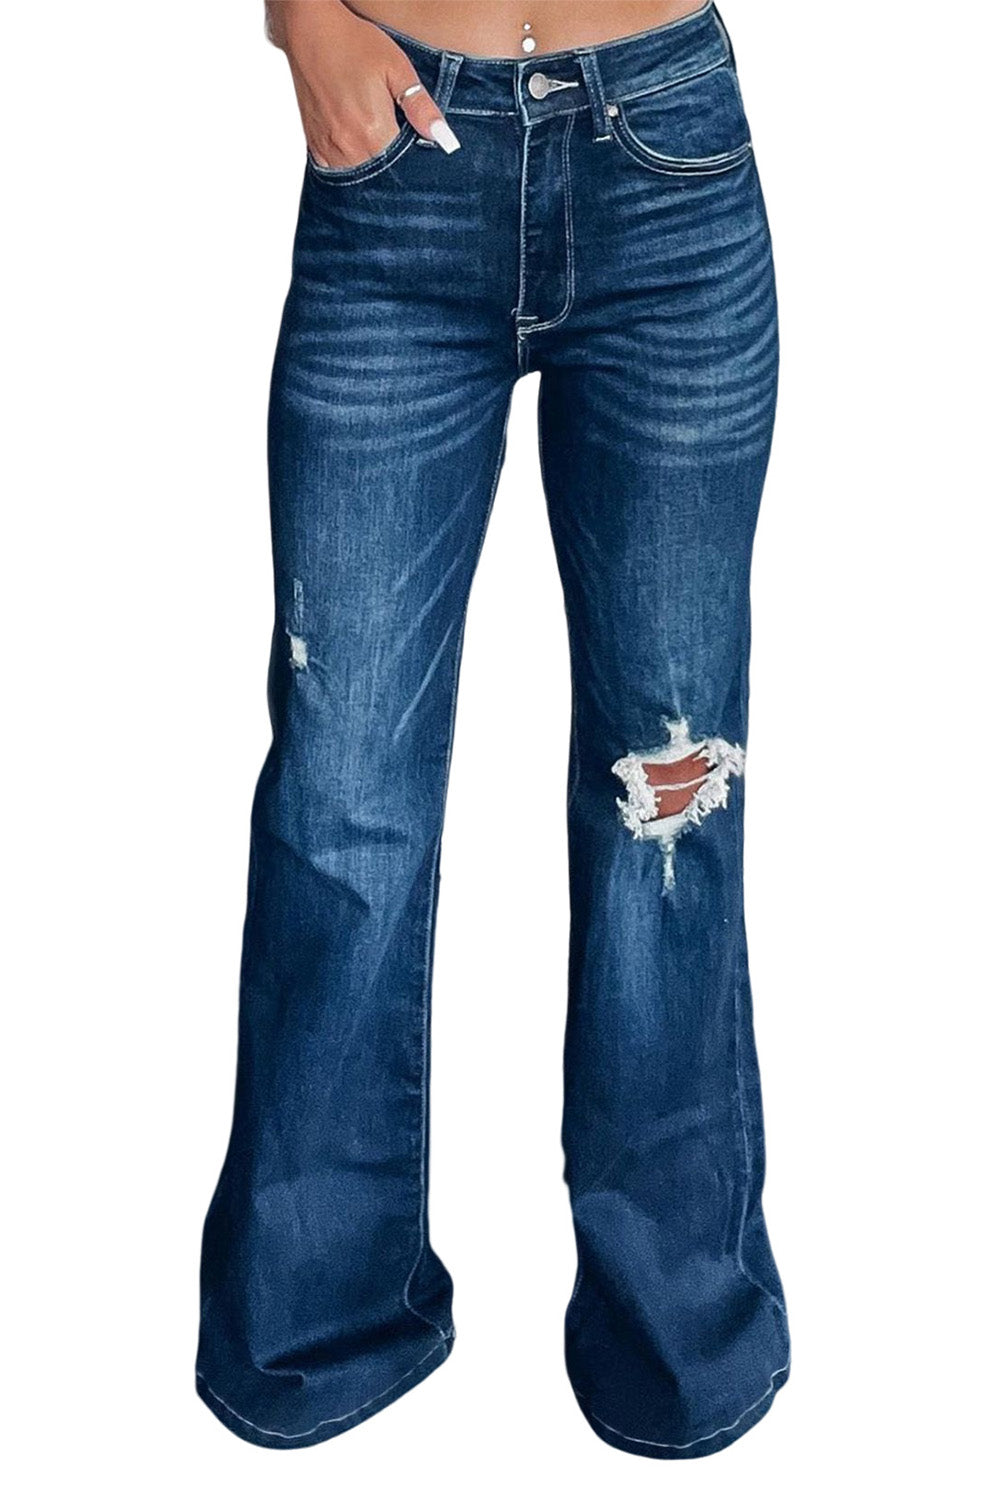 Asymmetrical Open Knee Distressed Flare Jeans - DromedarShop.com Online Boutique